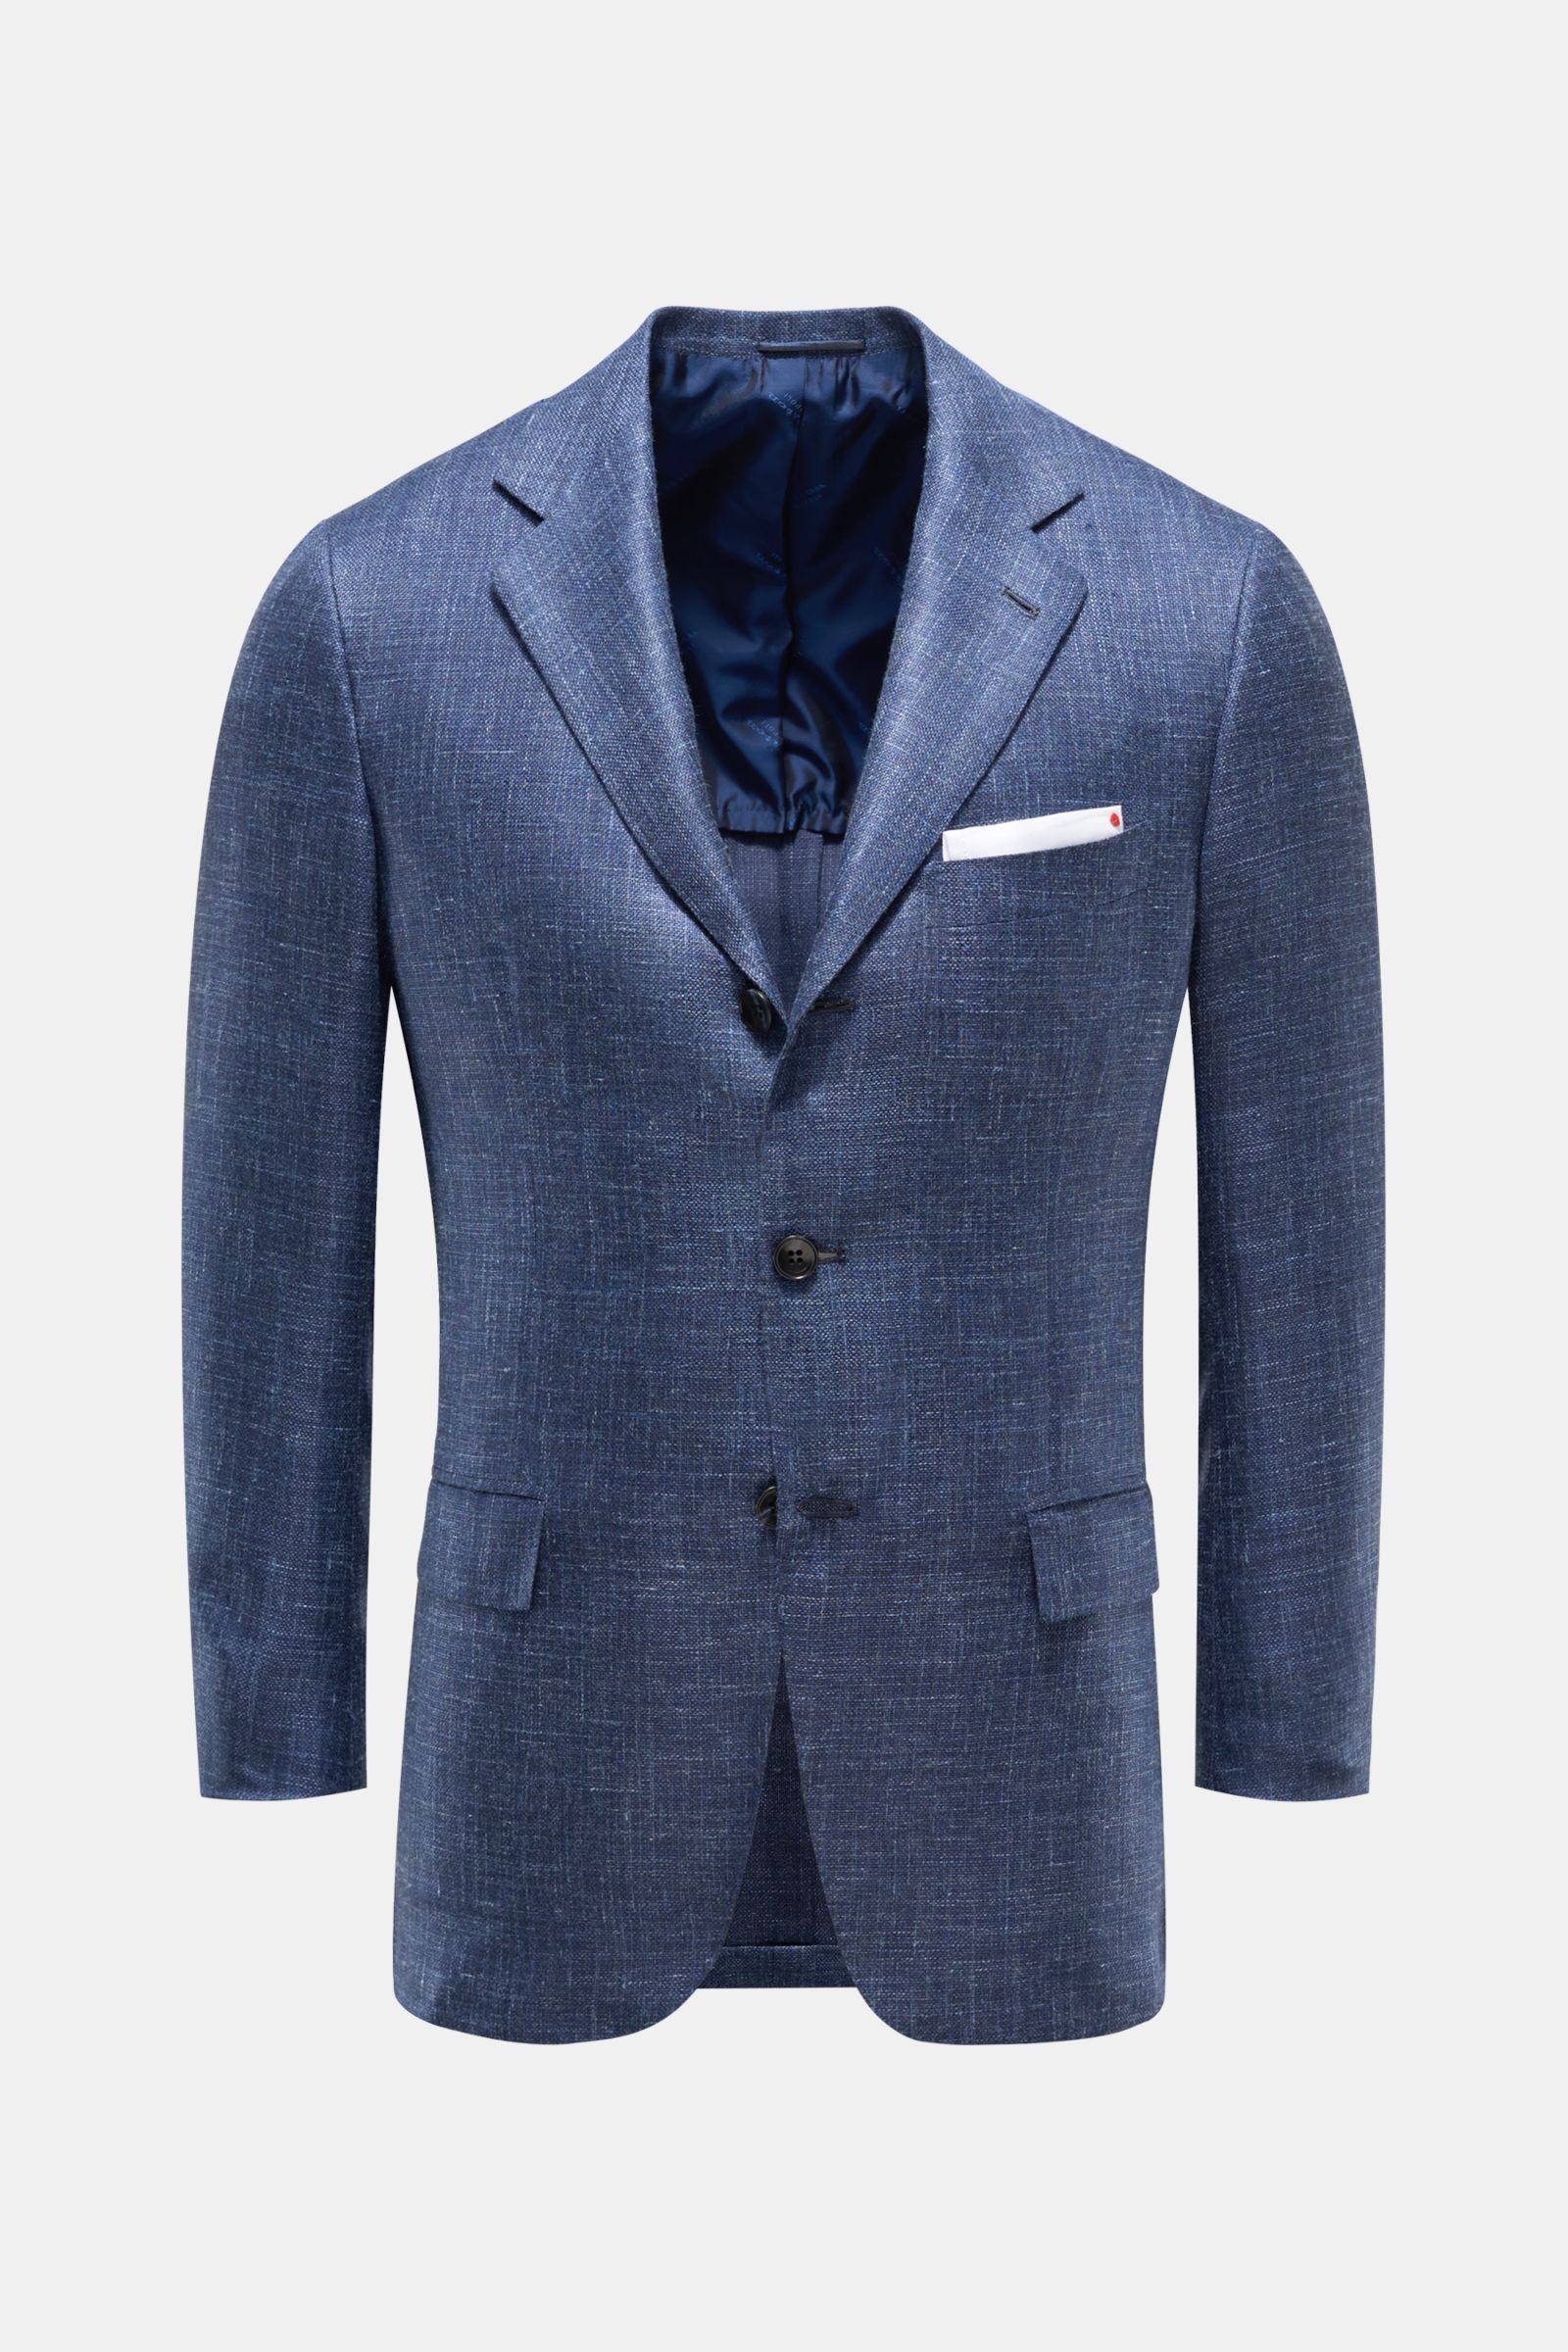 Smart-casual jacket grey blue